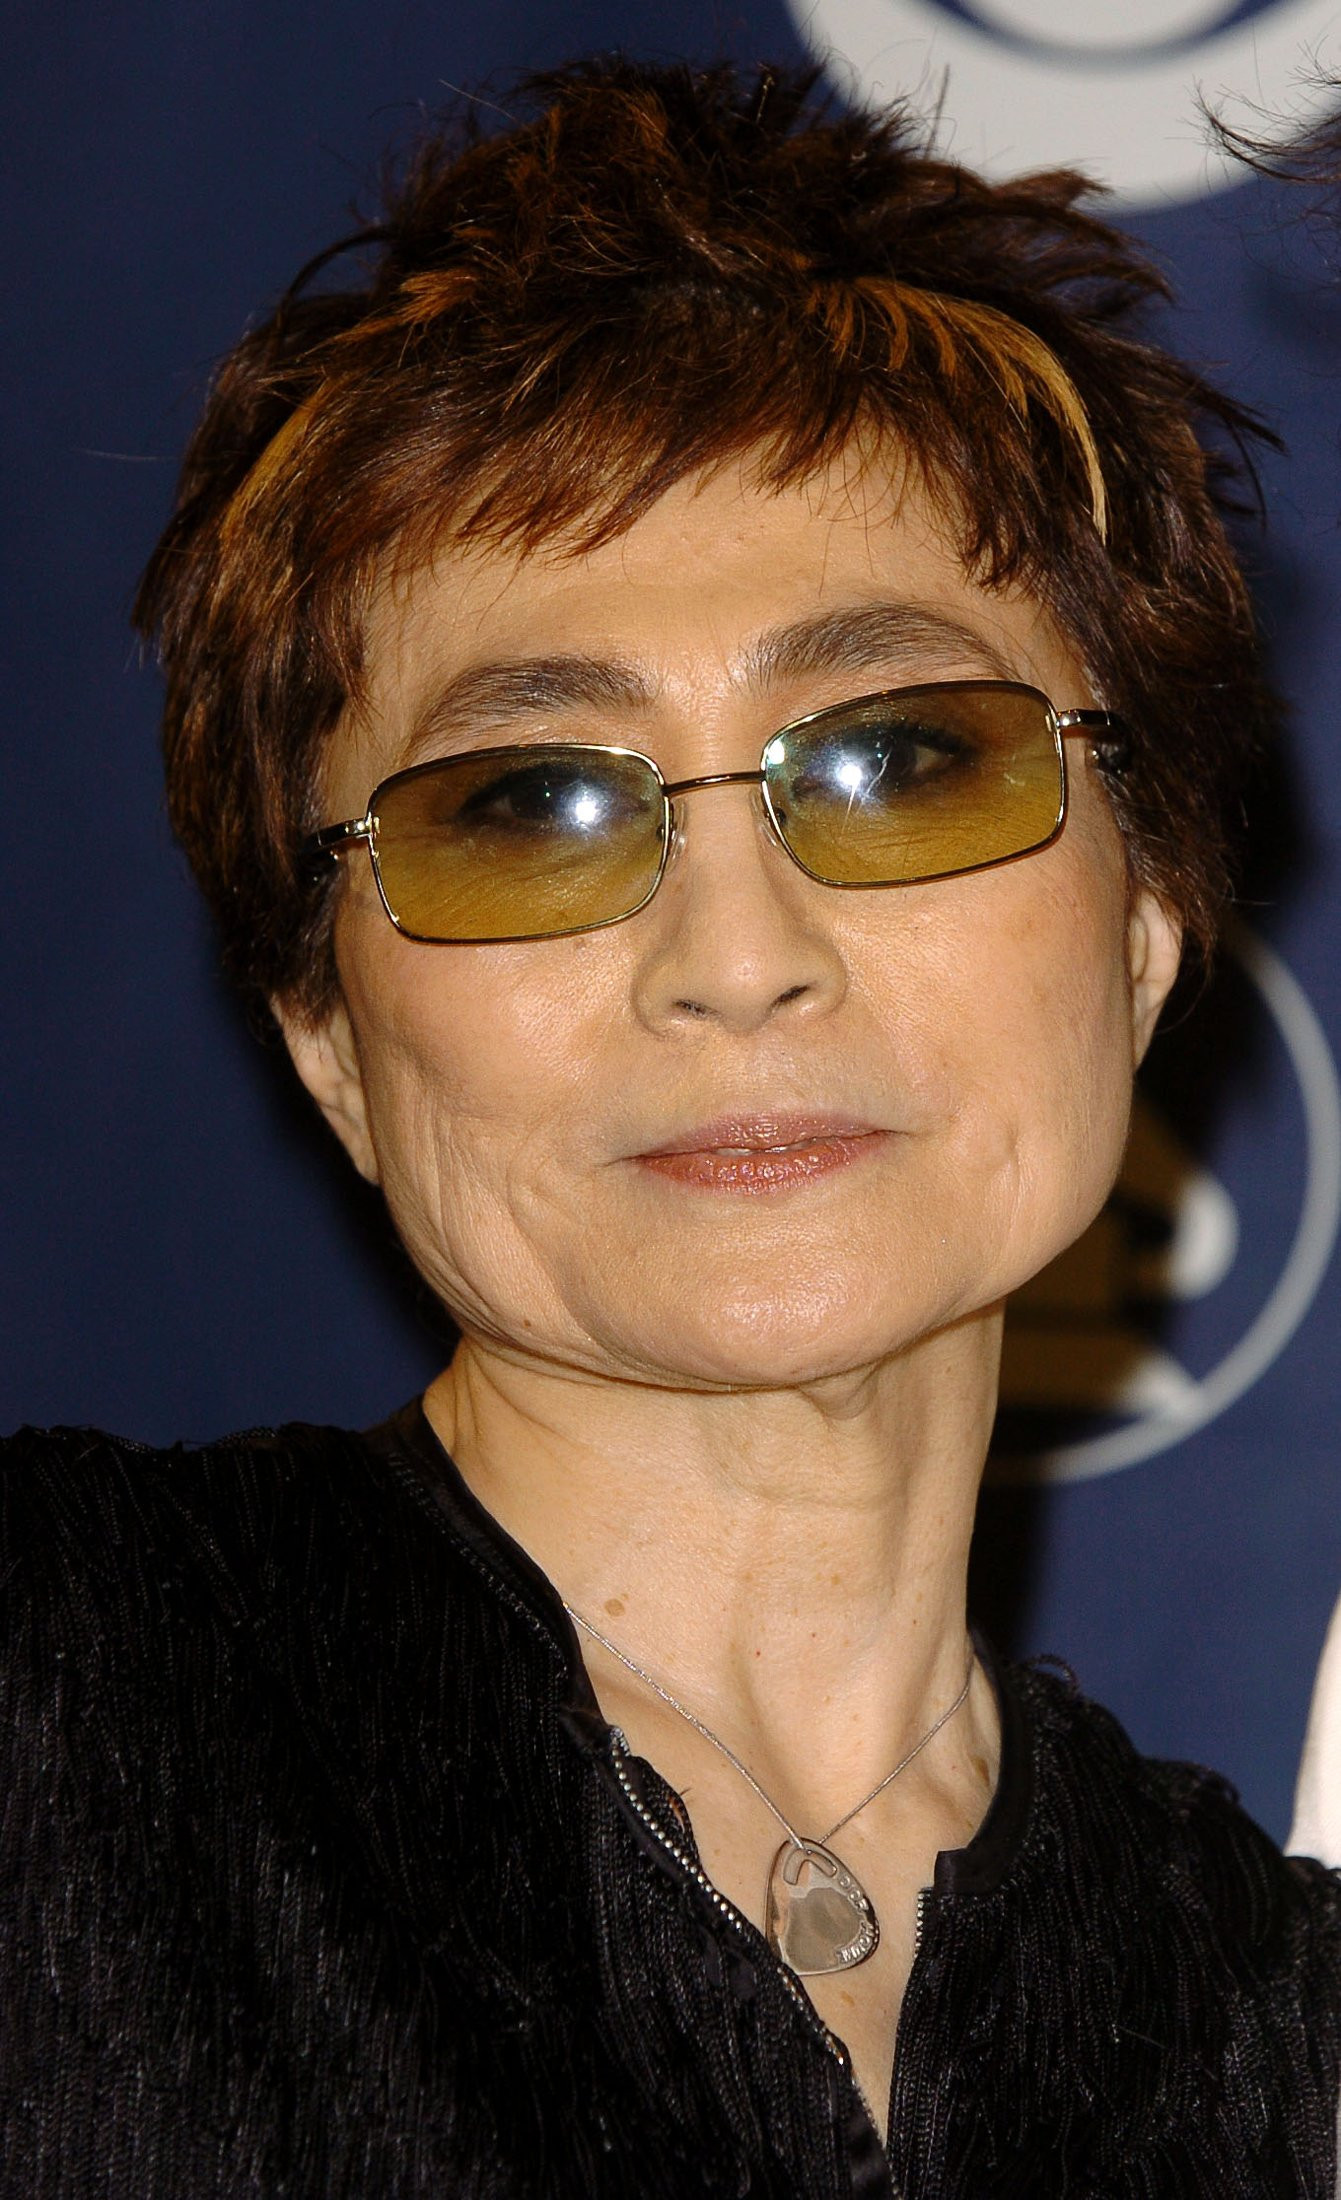 Йоко Оно (Yoko Ono)